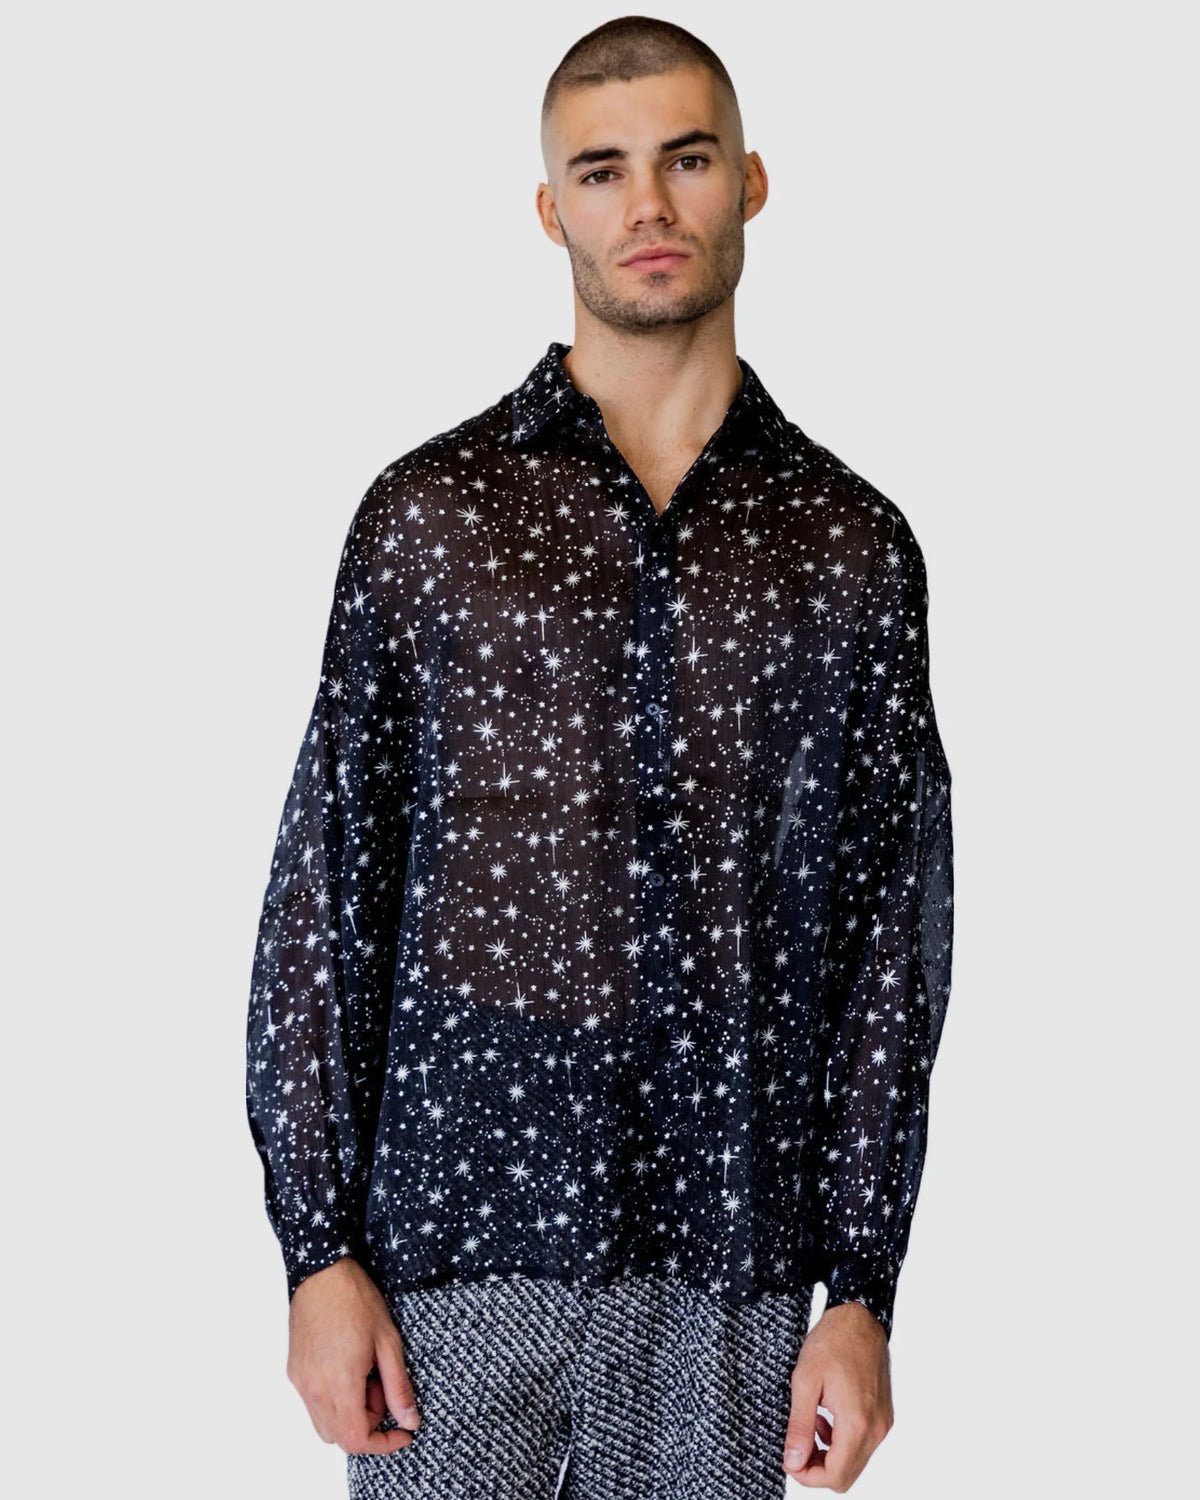 Justin Cassin Starboy Star Sheer Shirt in Black Color